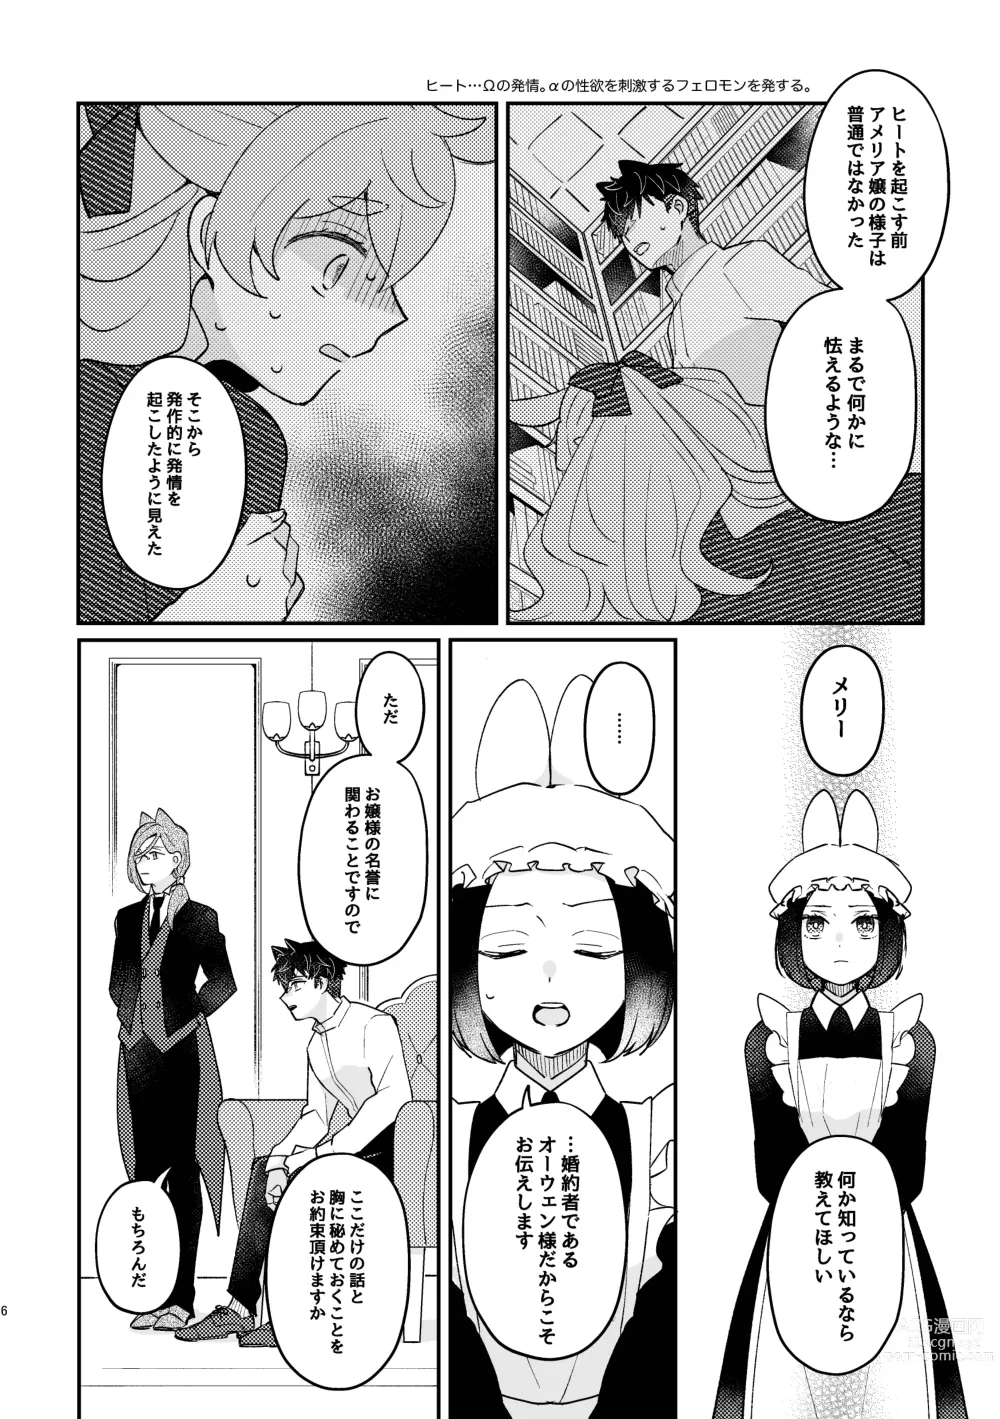 Page 6 of doujinshi Usagi Reijou to Ookami Reisoku